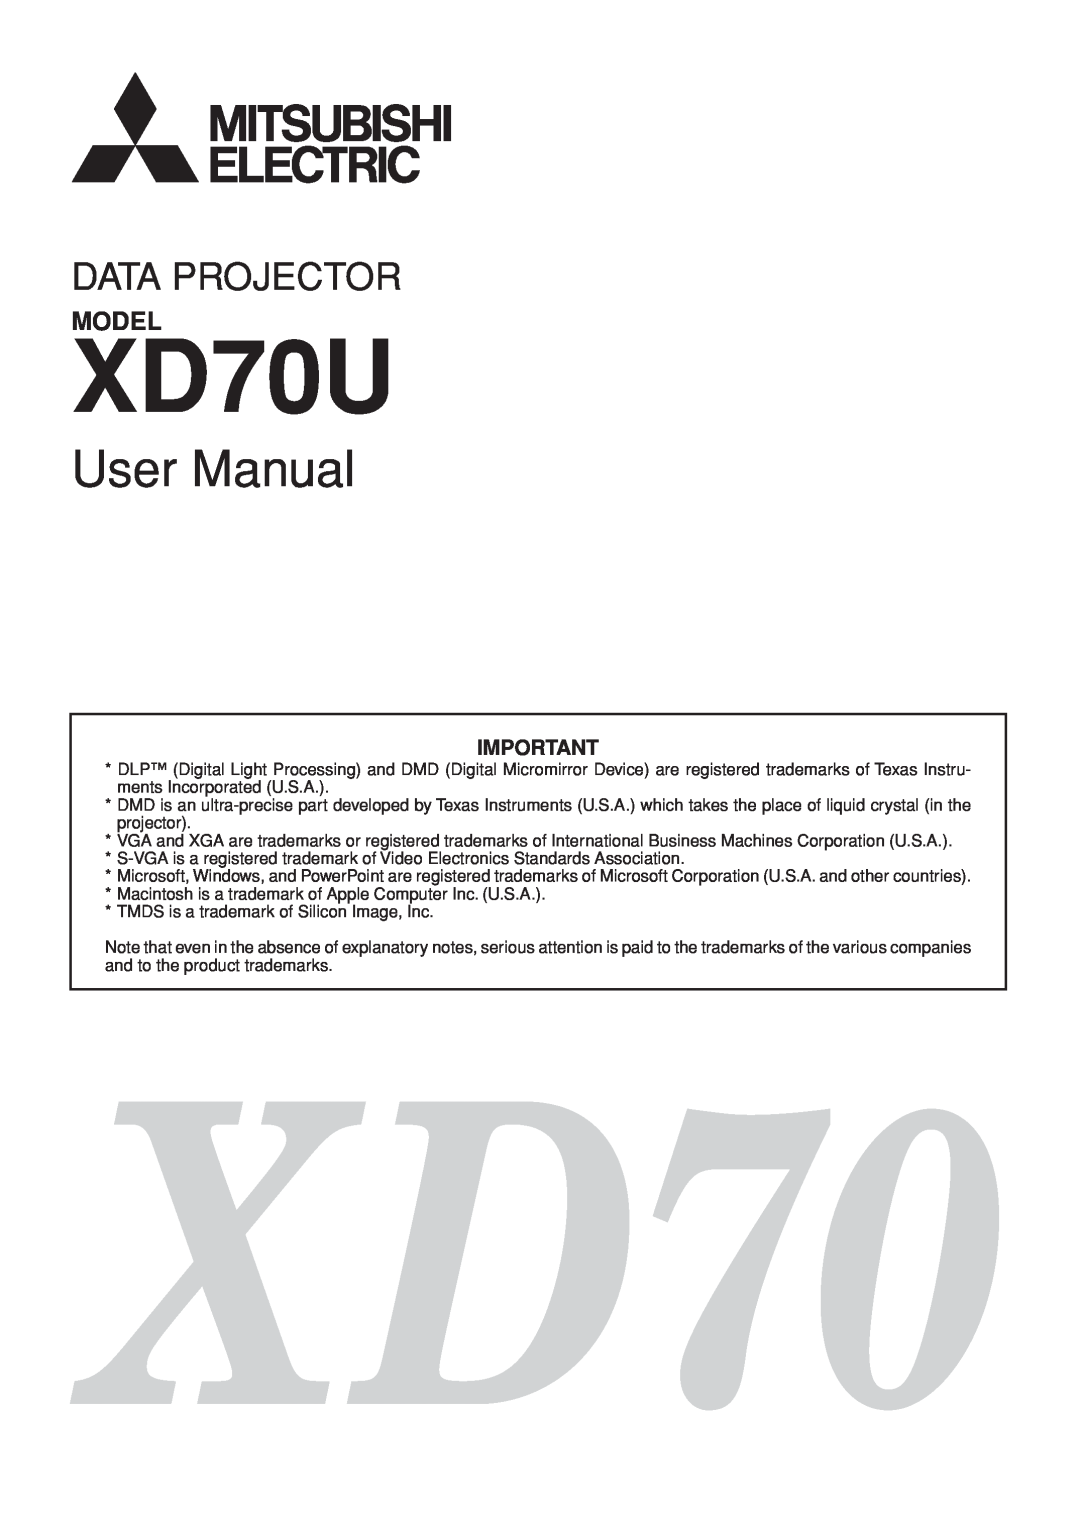 Mitsubishi Electronics DATA PROJECTOR user manual XD70U, User Manual, Data Projector, Model 